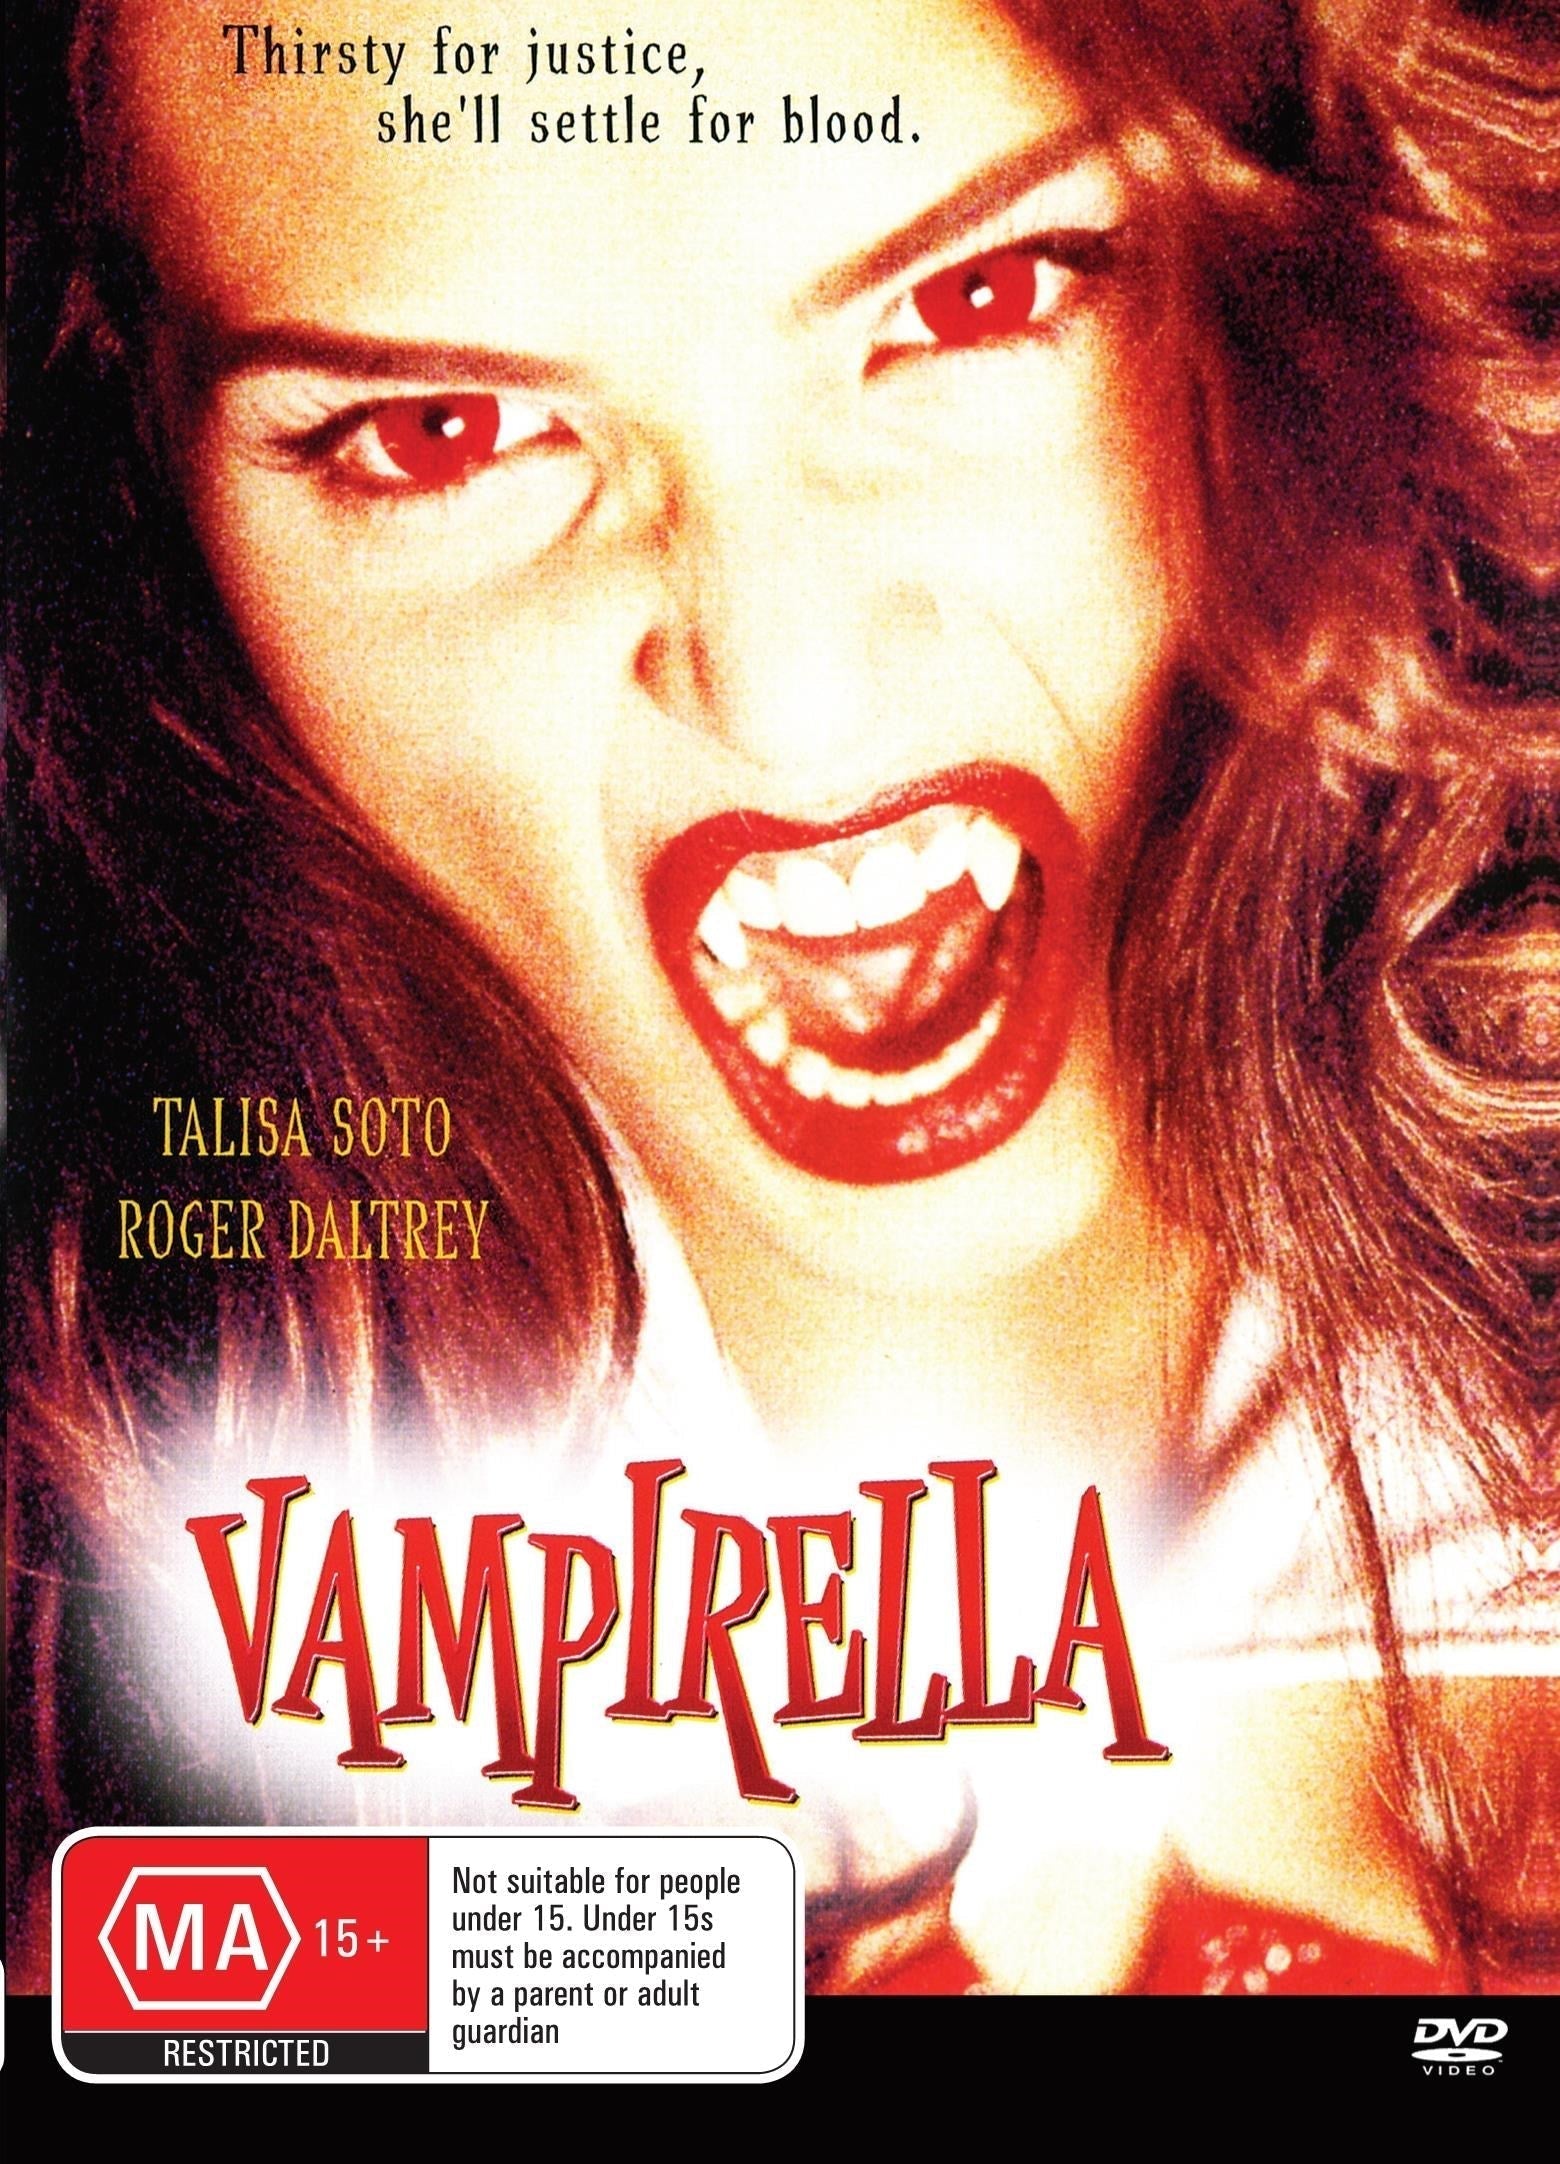 Vampirella rareandcollectibledvds